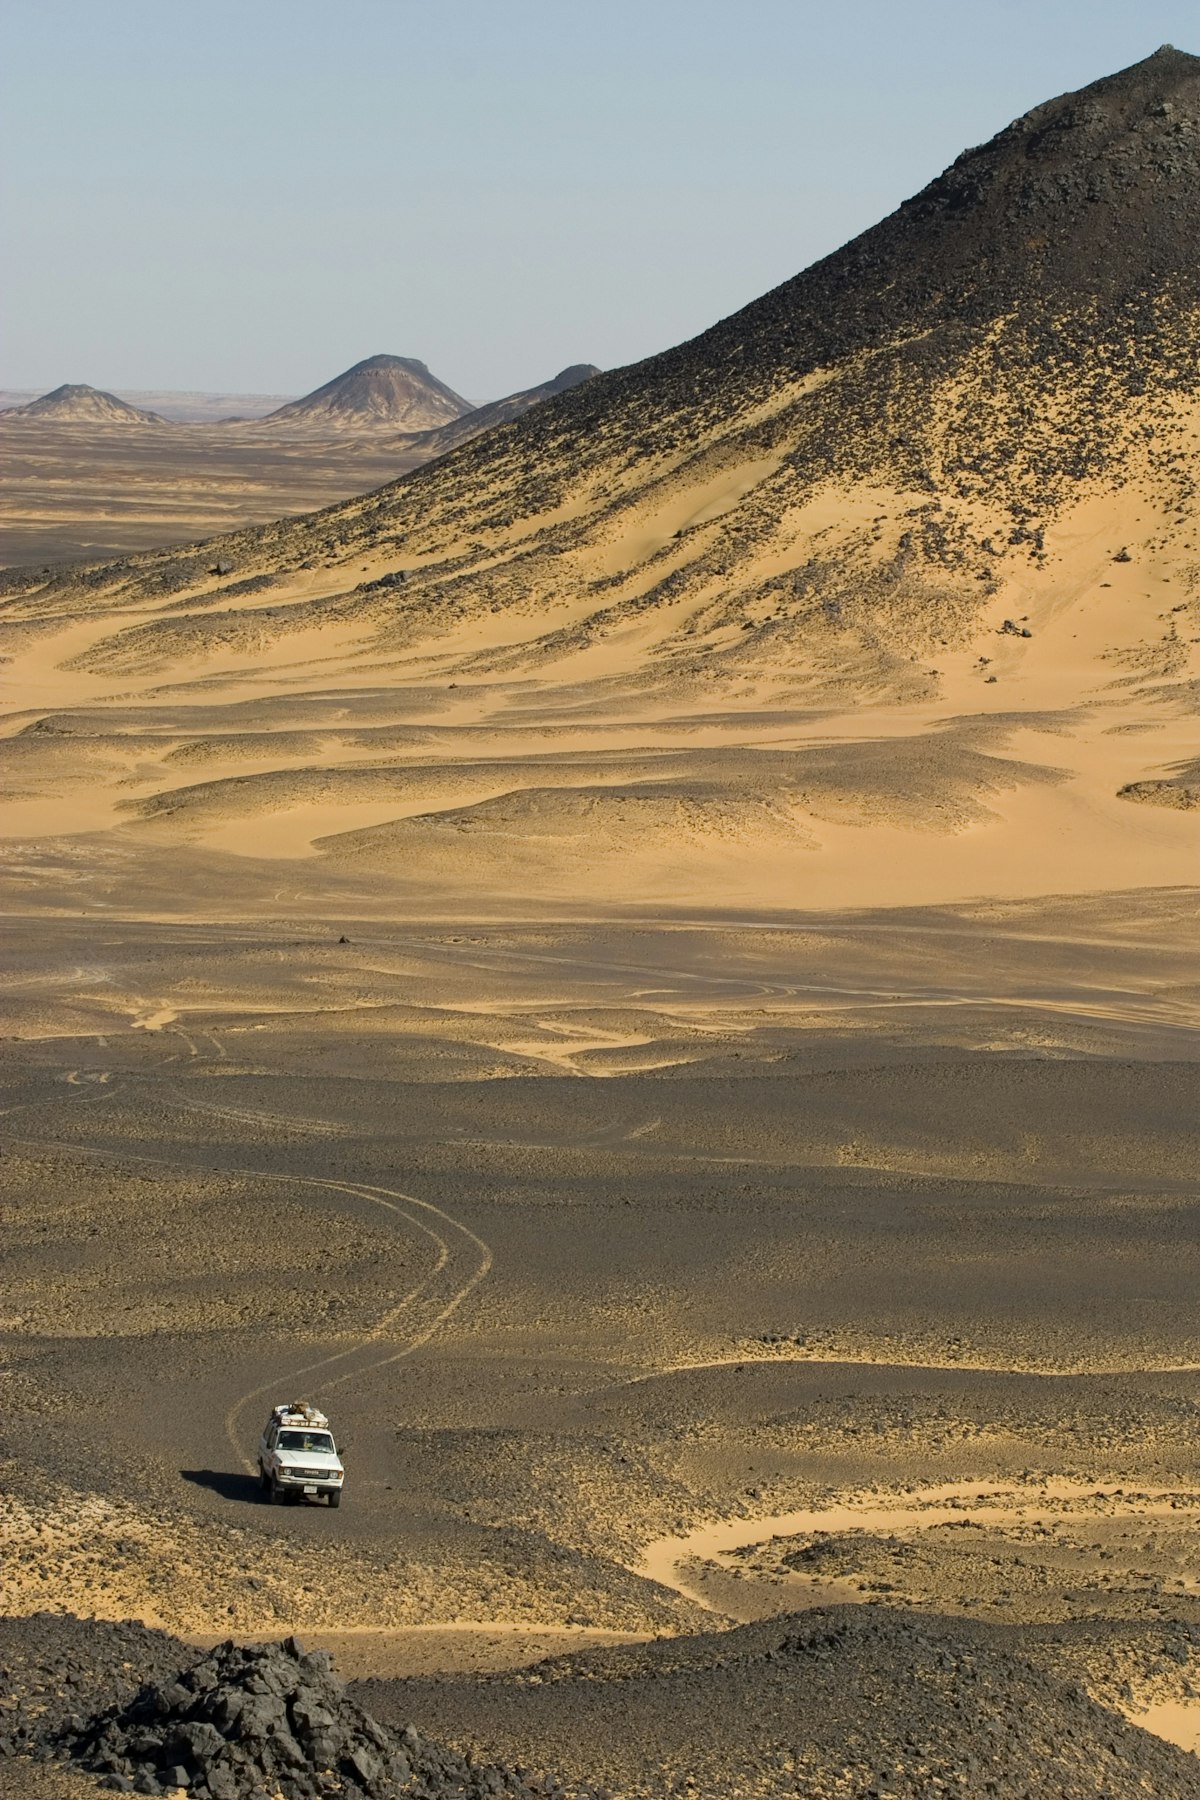 A 4x4 drives through the black desert in Egypt.